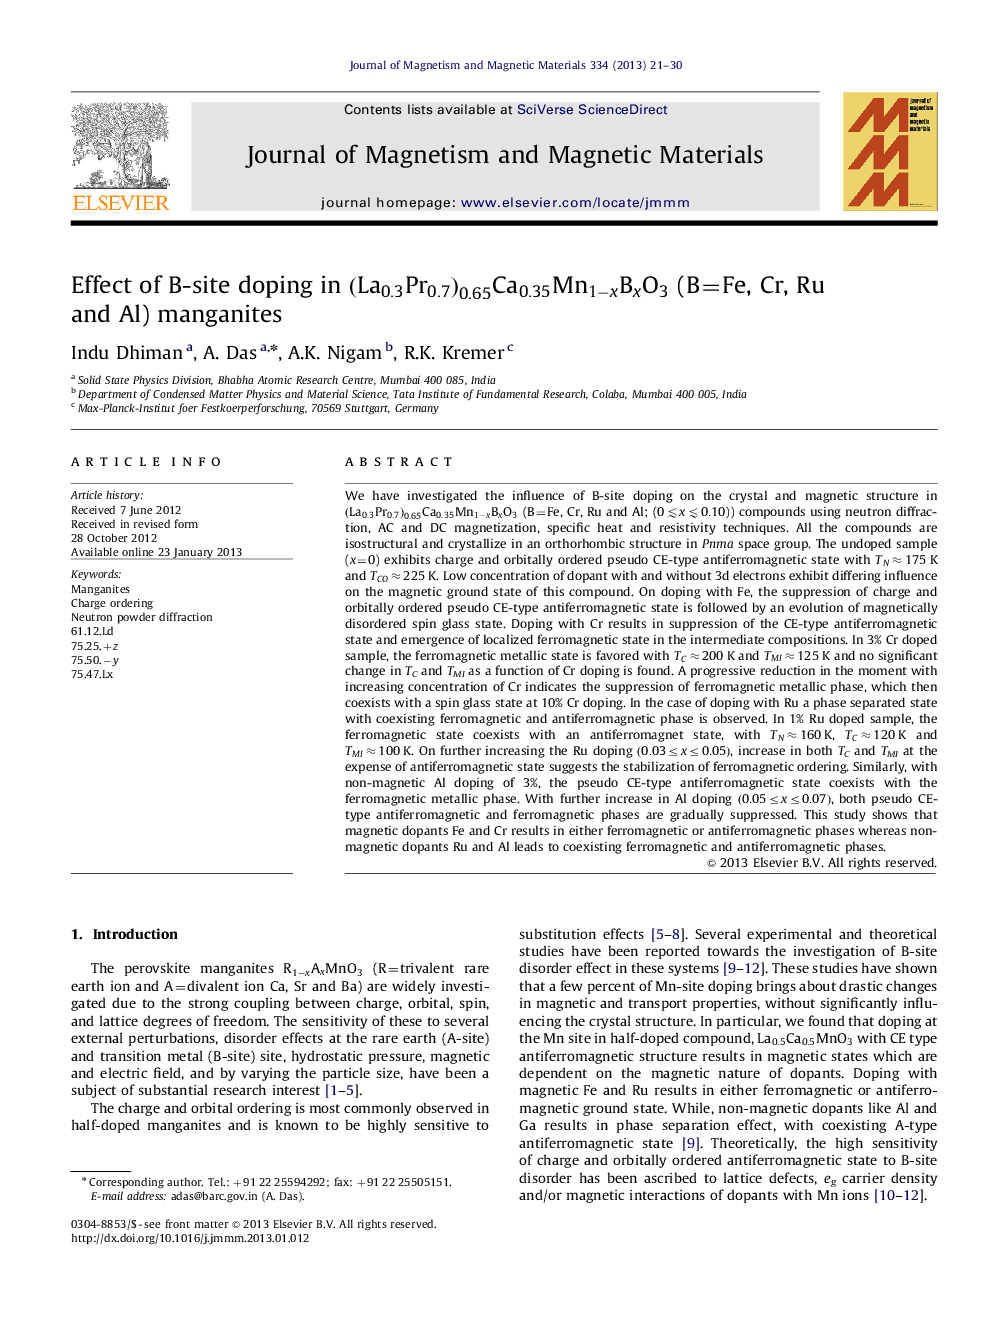 Effect of B-site doping in (La0.3Pr0.7)0.65Ca0.35Mn1−xBxO3(La0.3Pr0.7)0.65Ca0.35Mn1−xBxO3 (B=Fe, Cr, Ru and Al)manganites